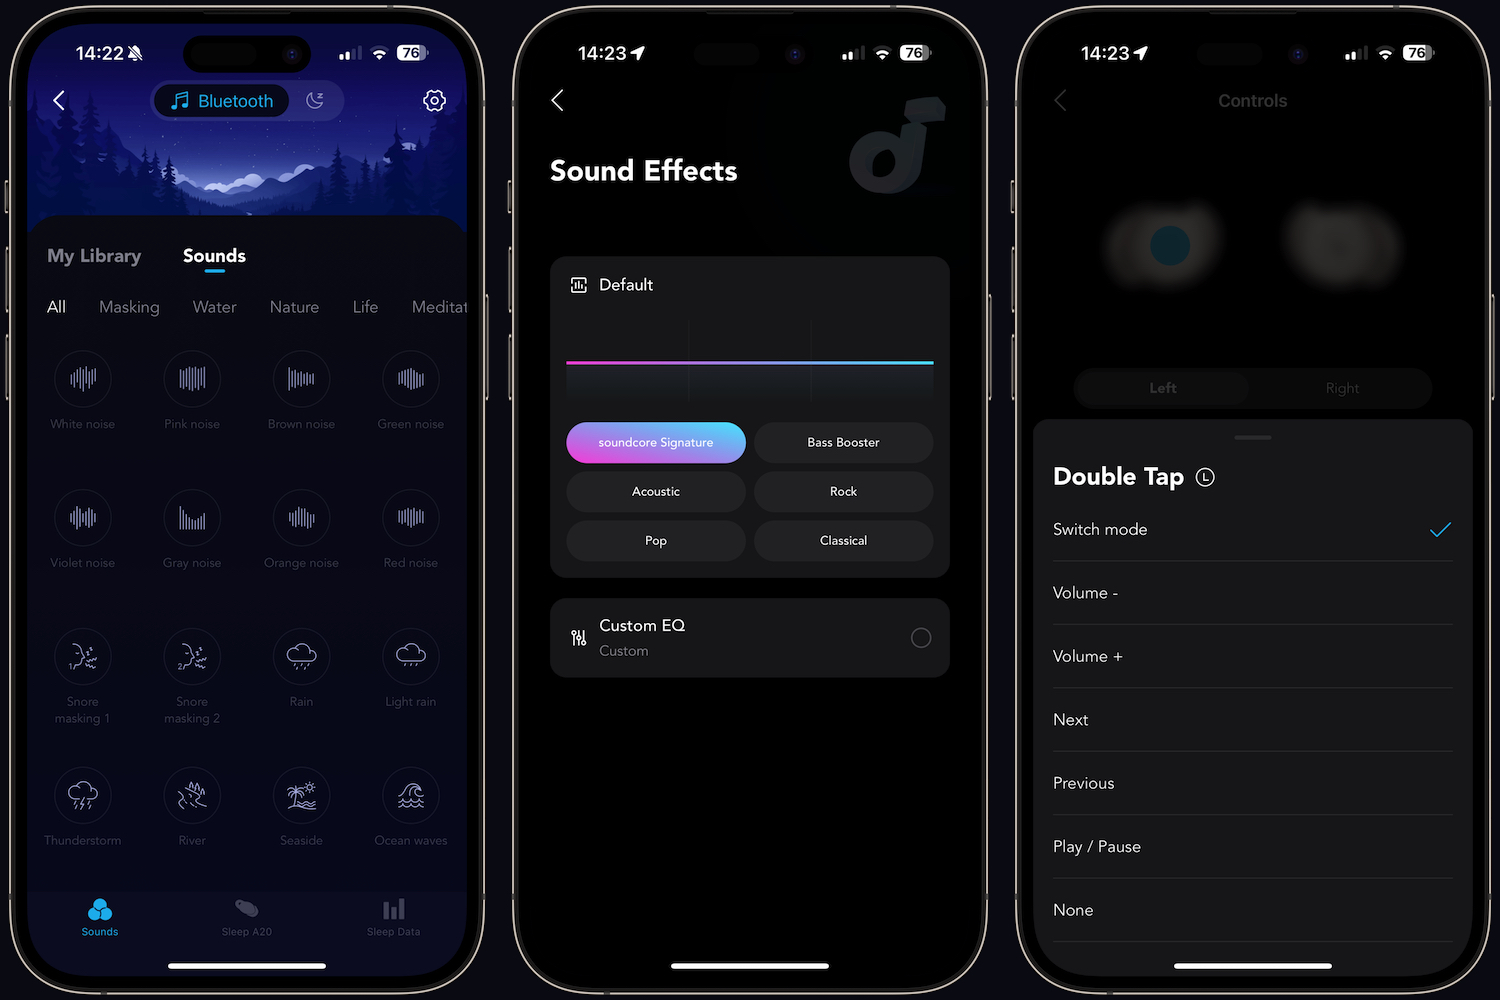 Screenshots taken from the Anker Soundcore Sleep A20's app.